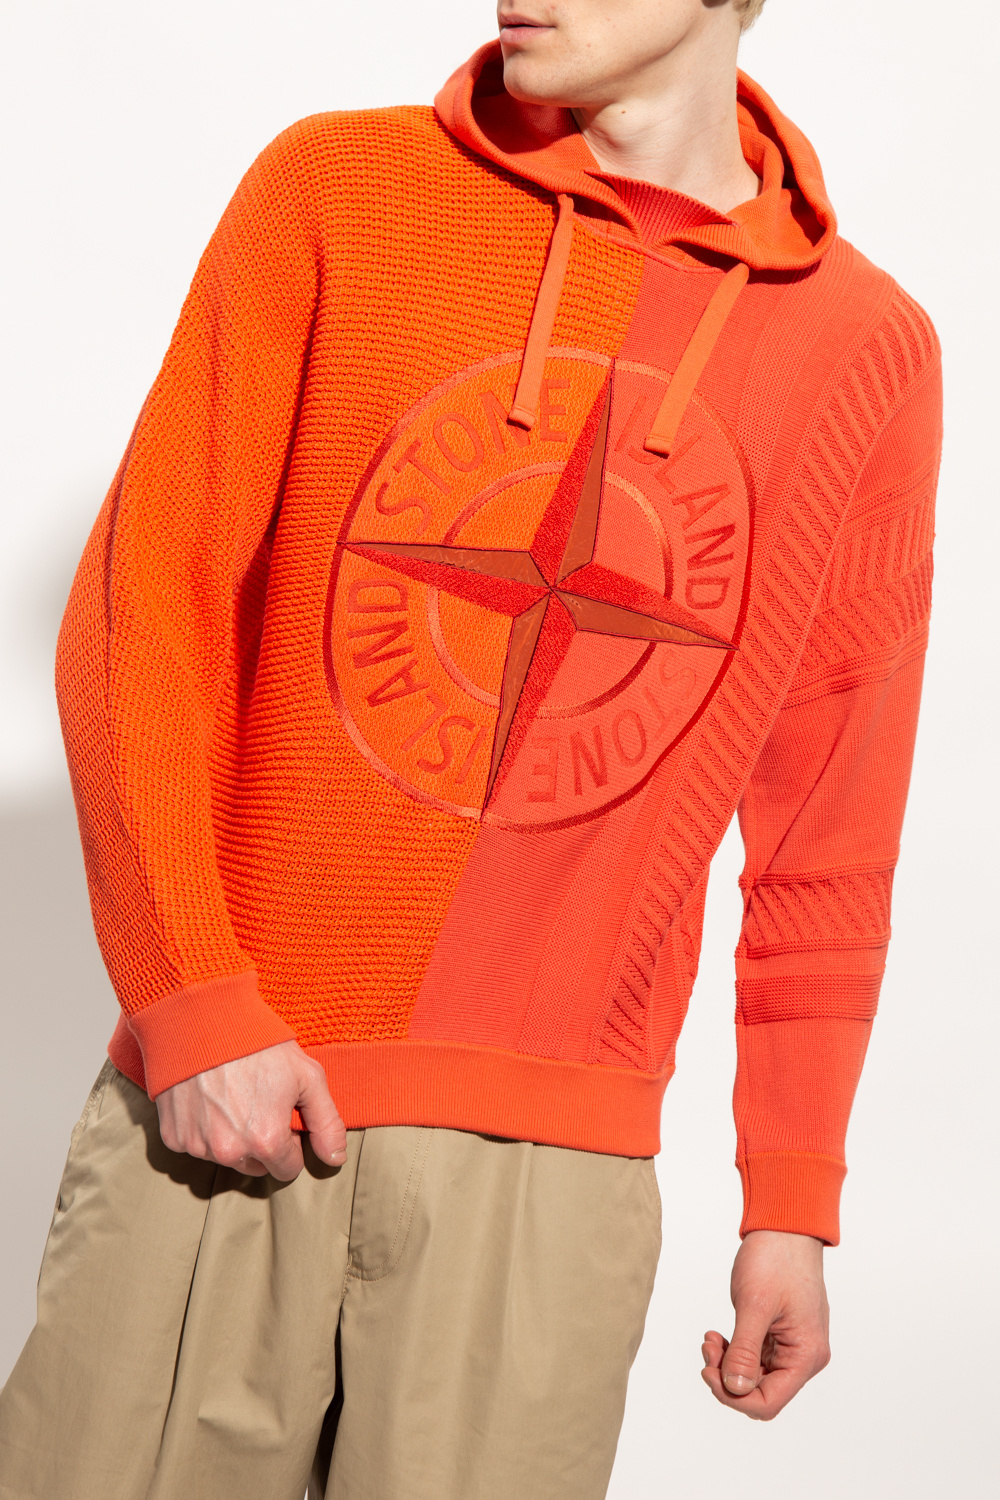 Rosa striped cotton shirt - IetpShops Jersey - Orange AIDES print hoodie  White Stone Island